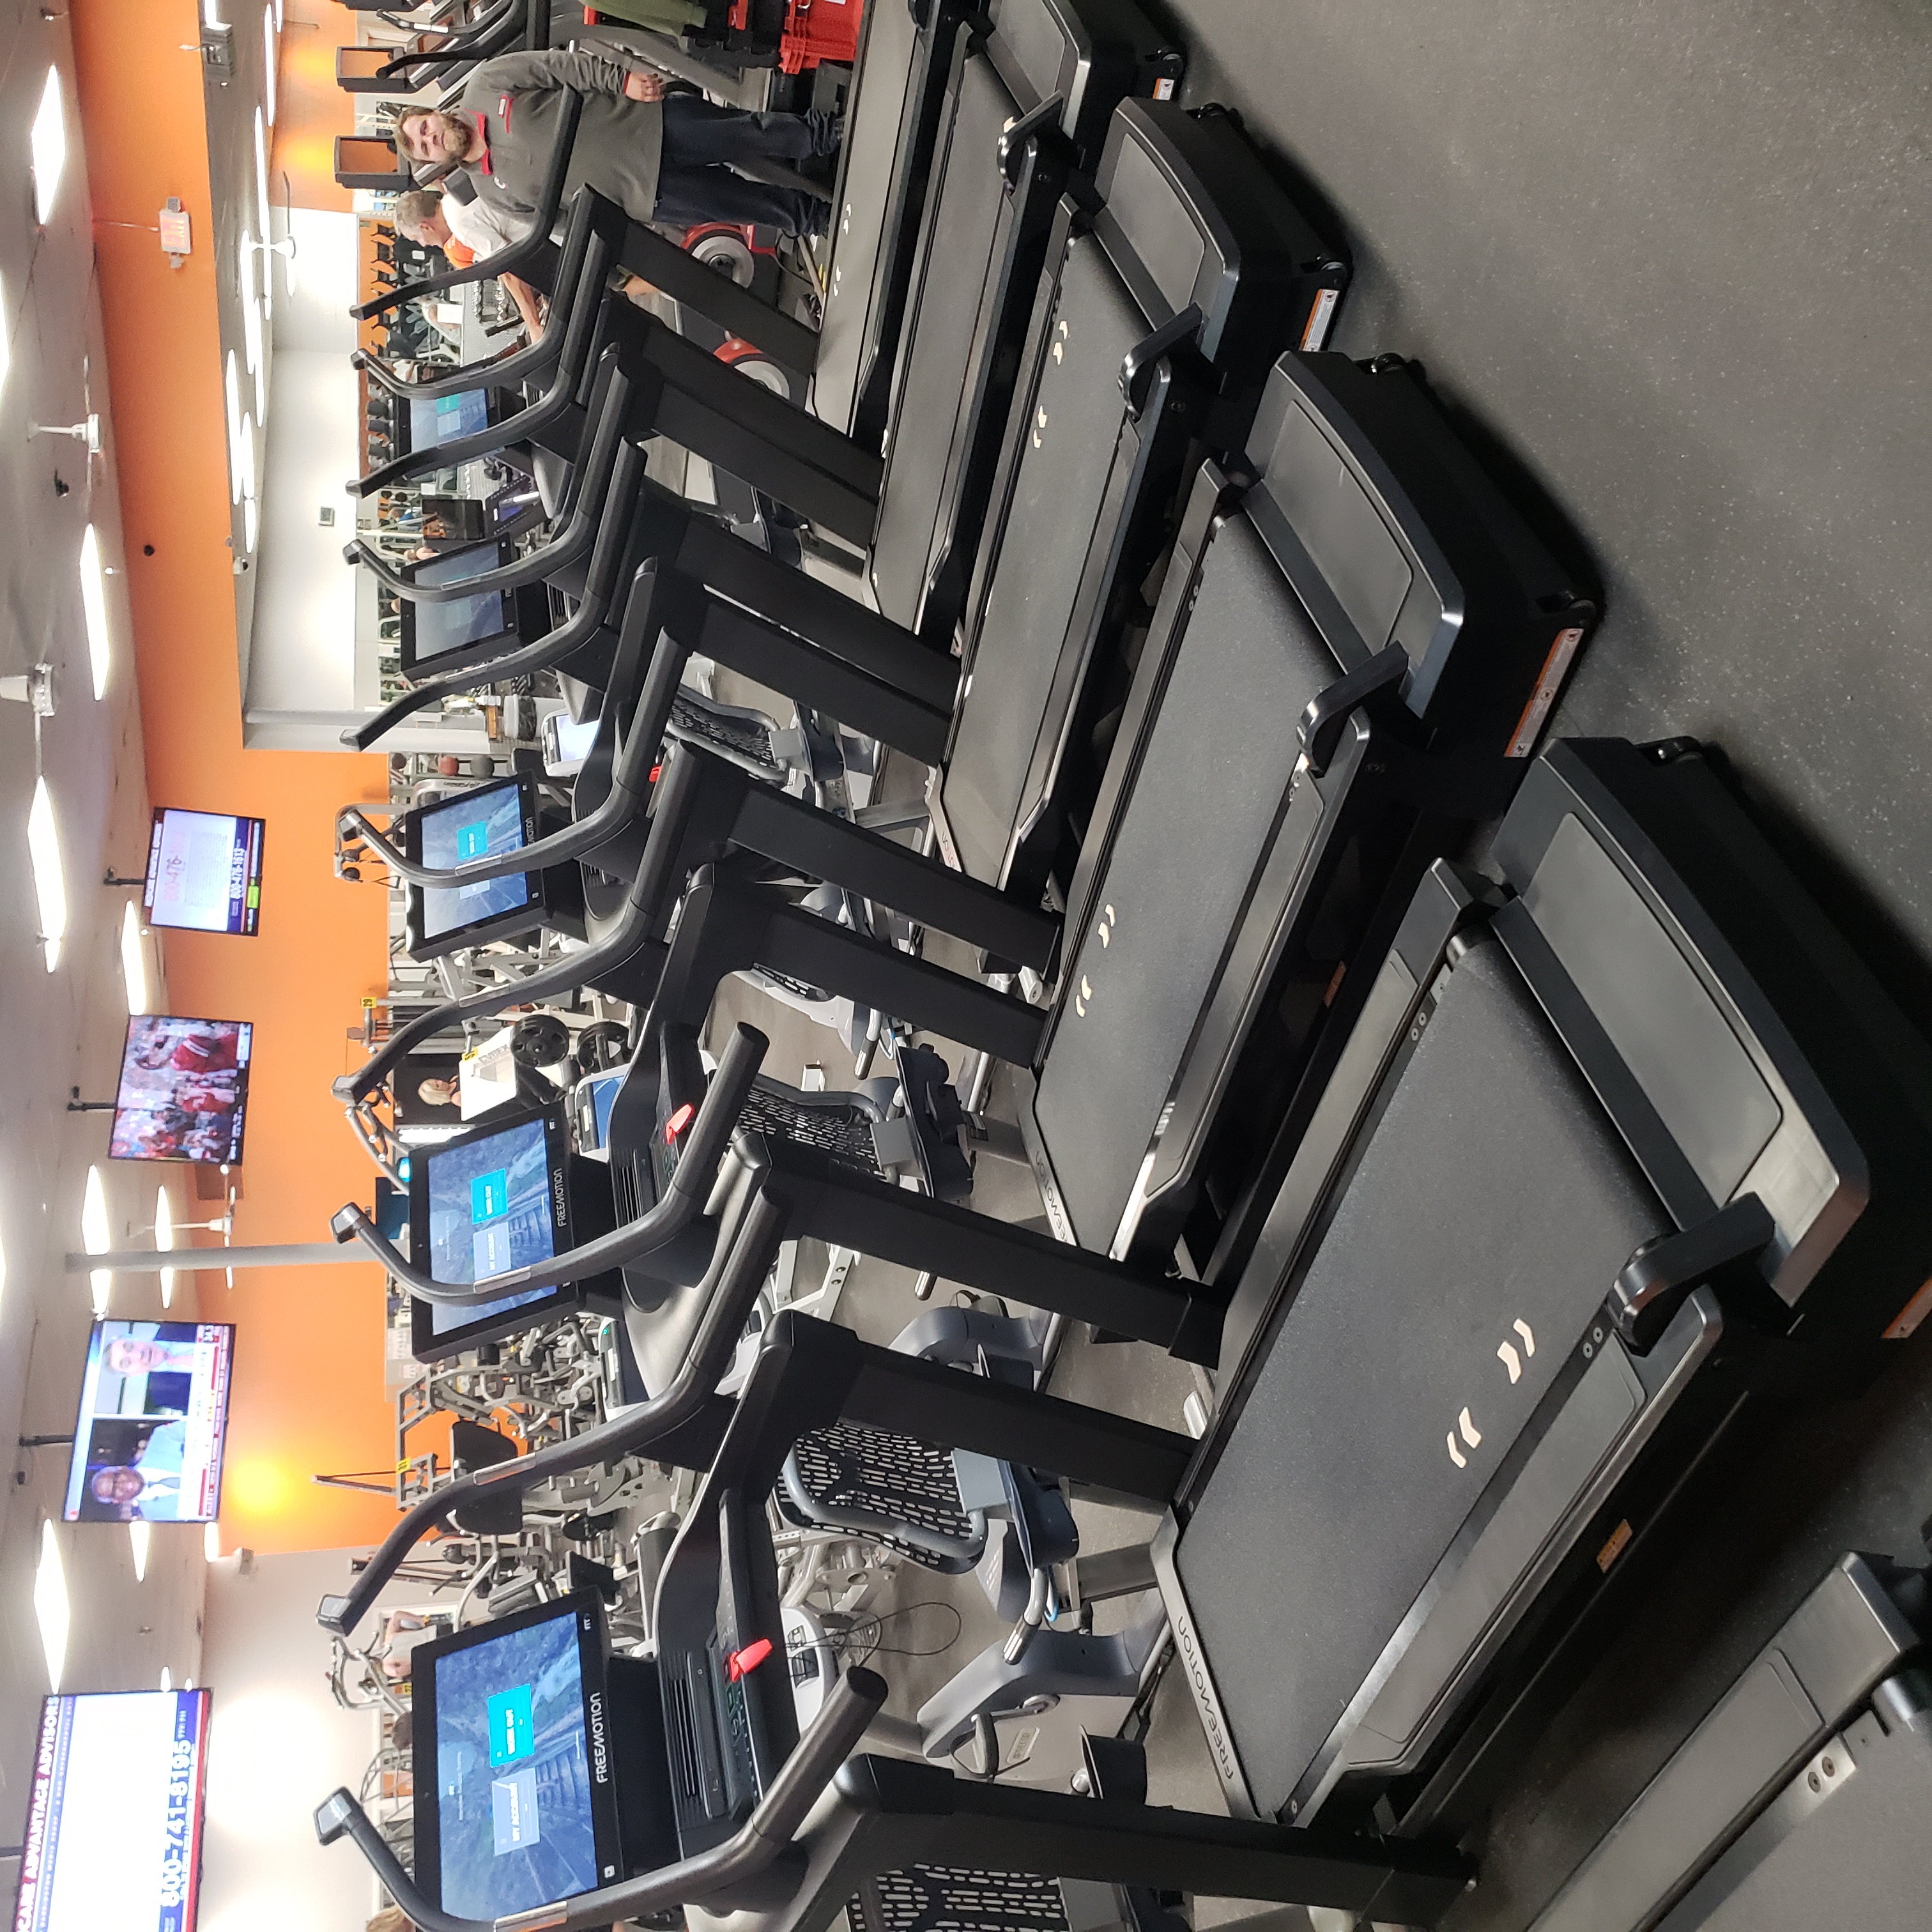 A row of treadmills in a gym